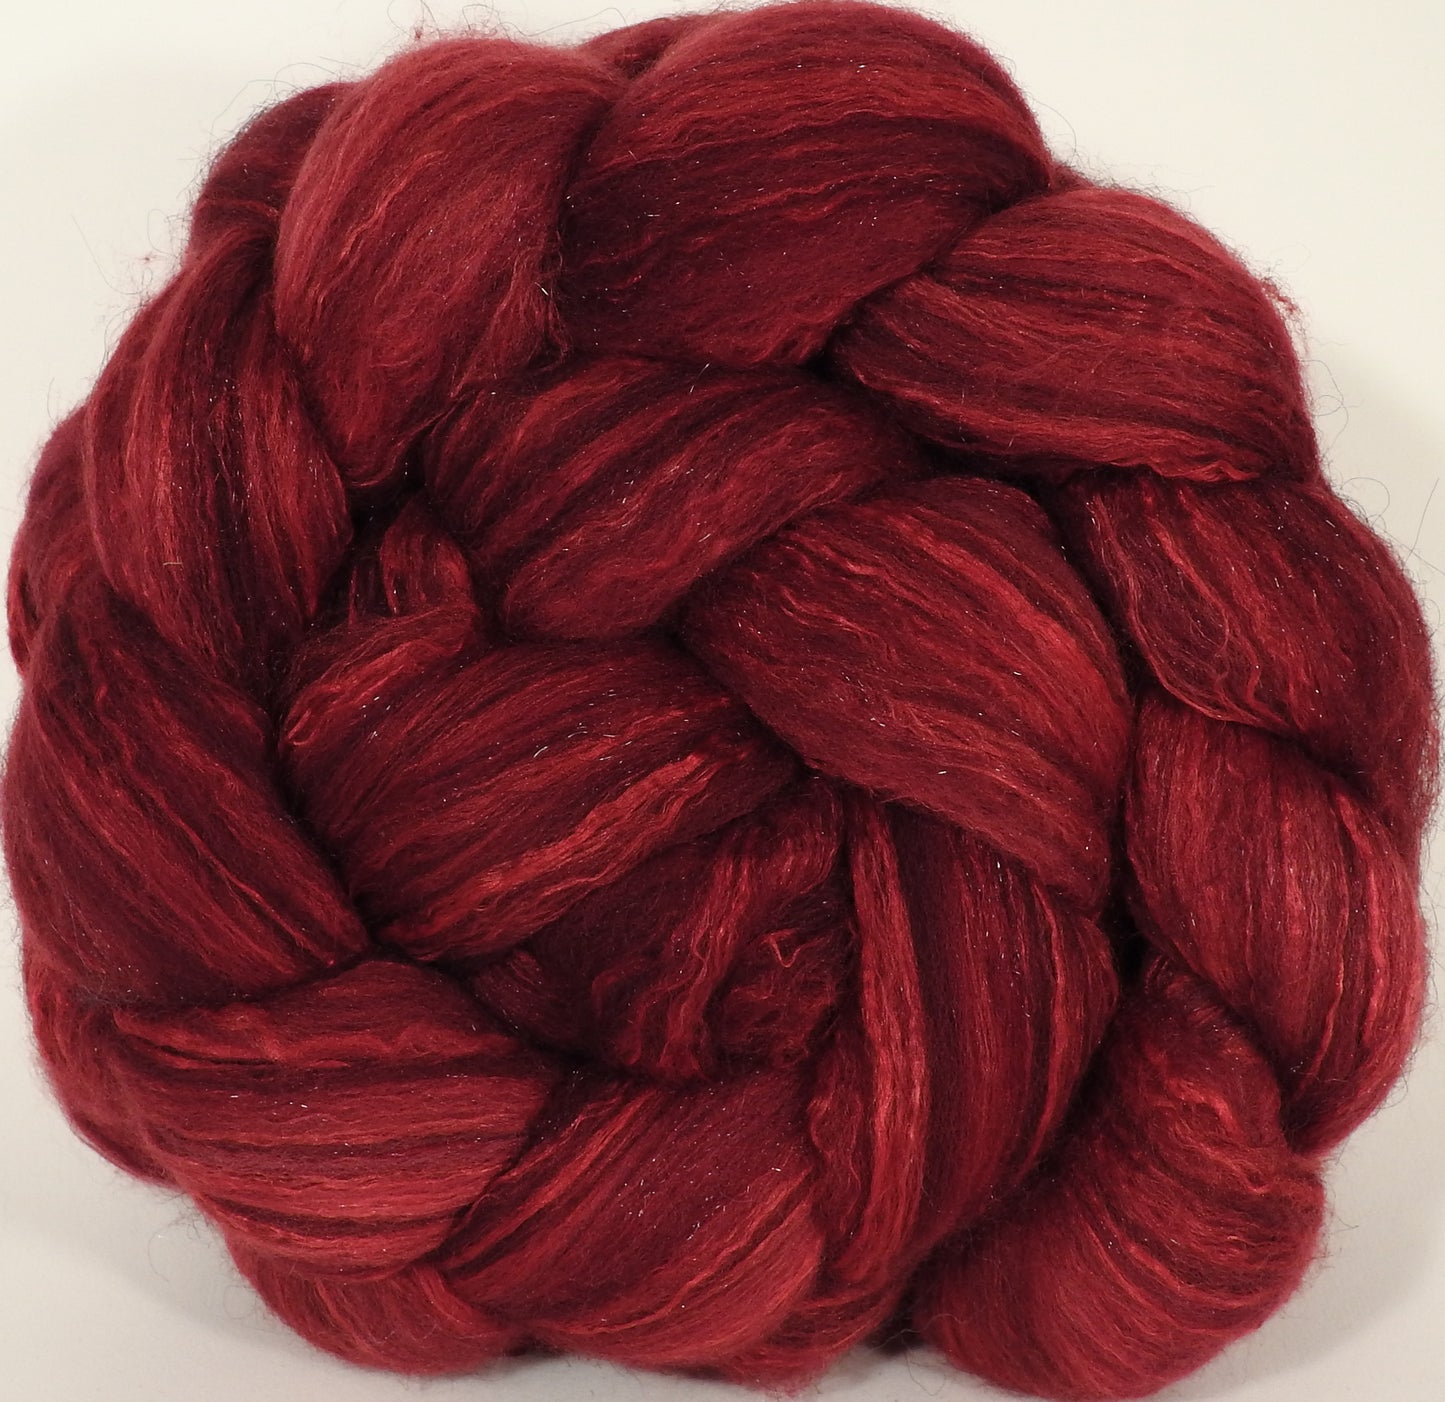 Batt in a Braid #7 -Crimson-(6.4 oz.) Polwarth/ Manx / Mulberry silk/ Firestar (30/30/30/10) - Inglenook Fibers